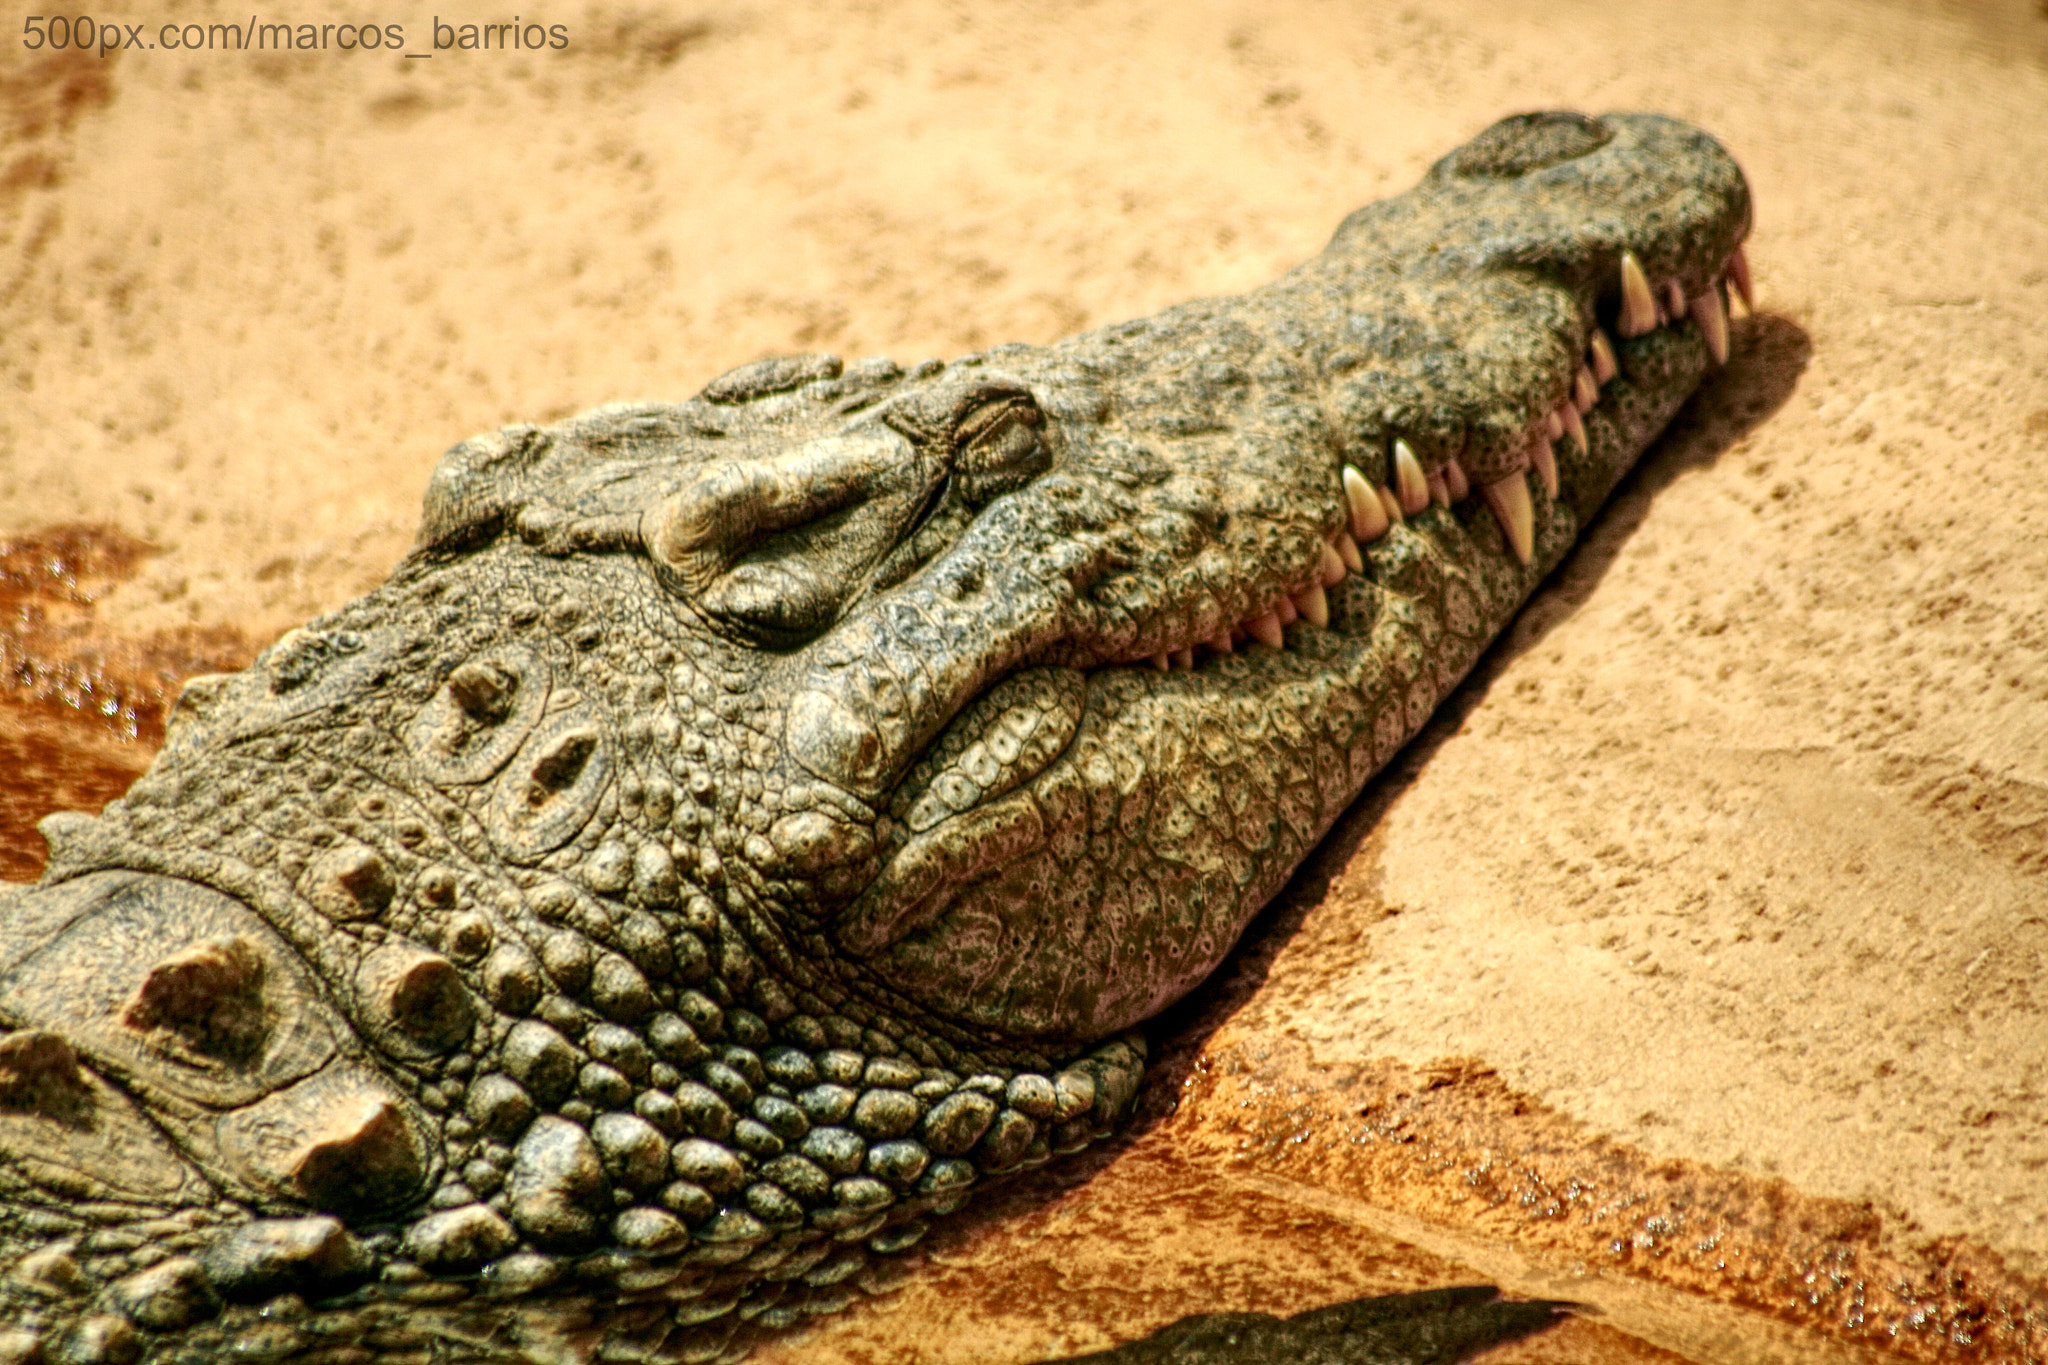 70.0 - 300.0 mm sample photo. Sleepy crocodile photography